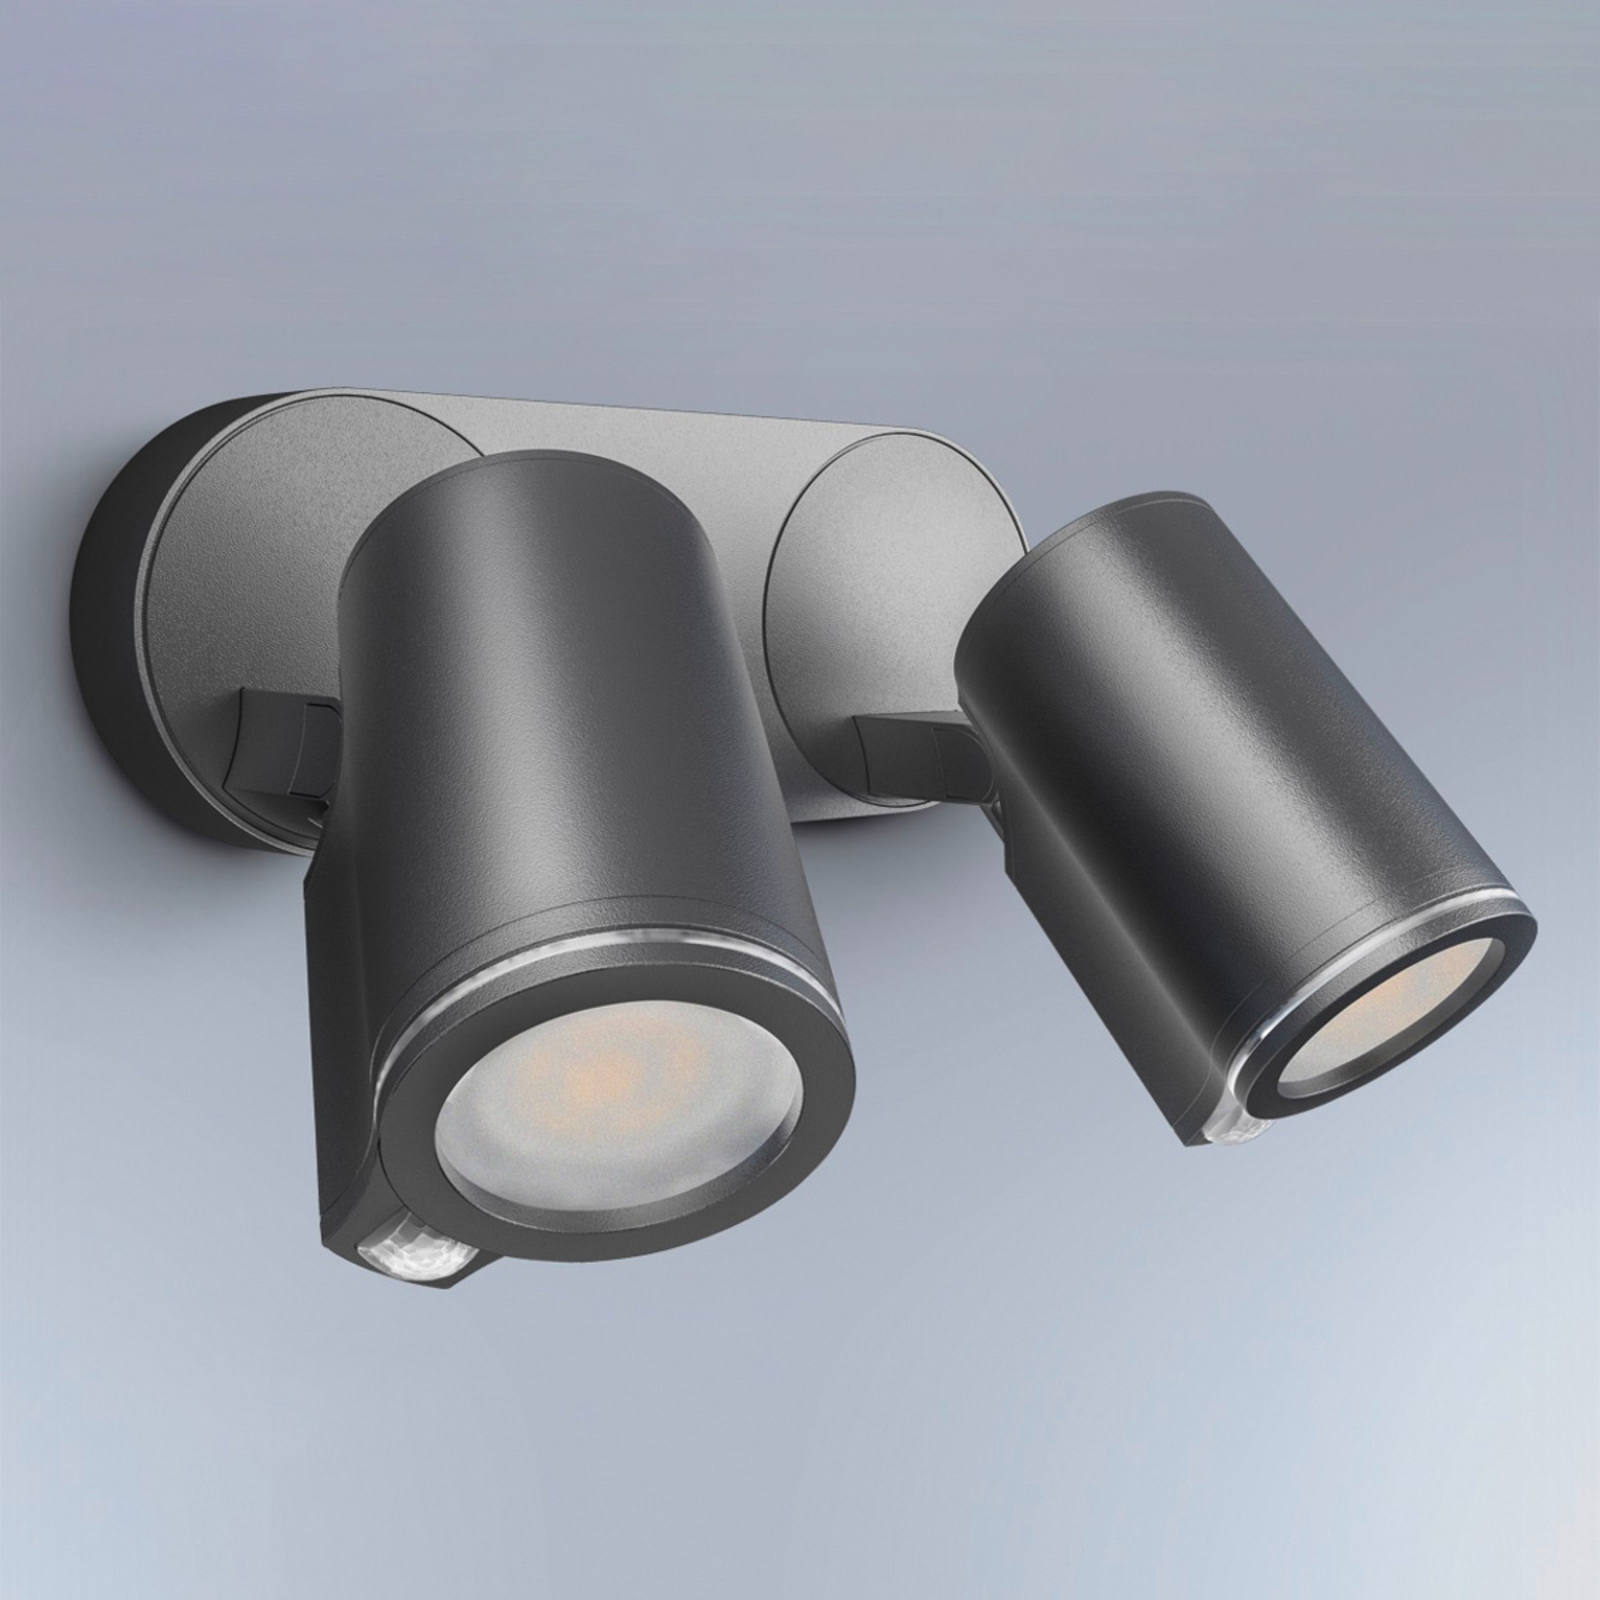 STEINEL Spot Duo SC -LED-kohdevalaisin 2 lamppua